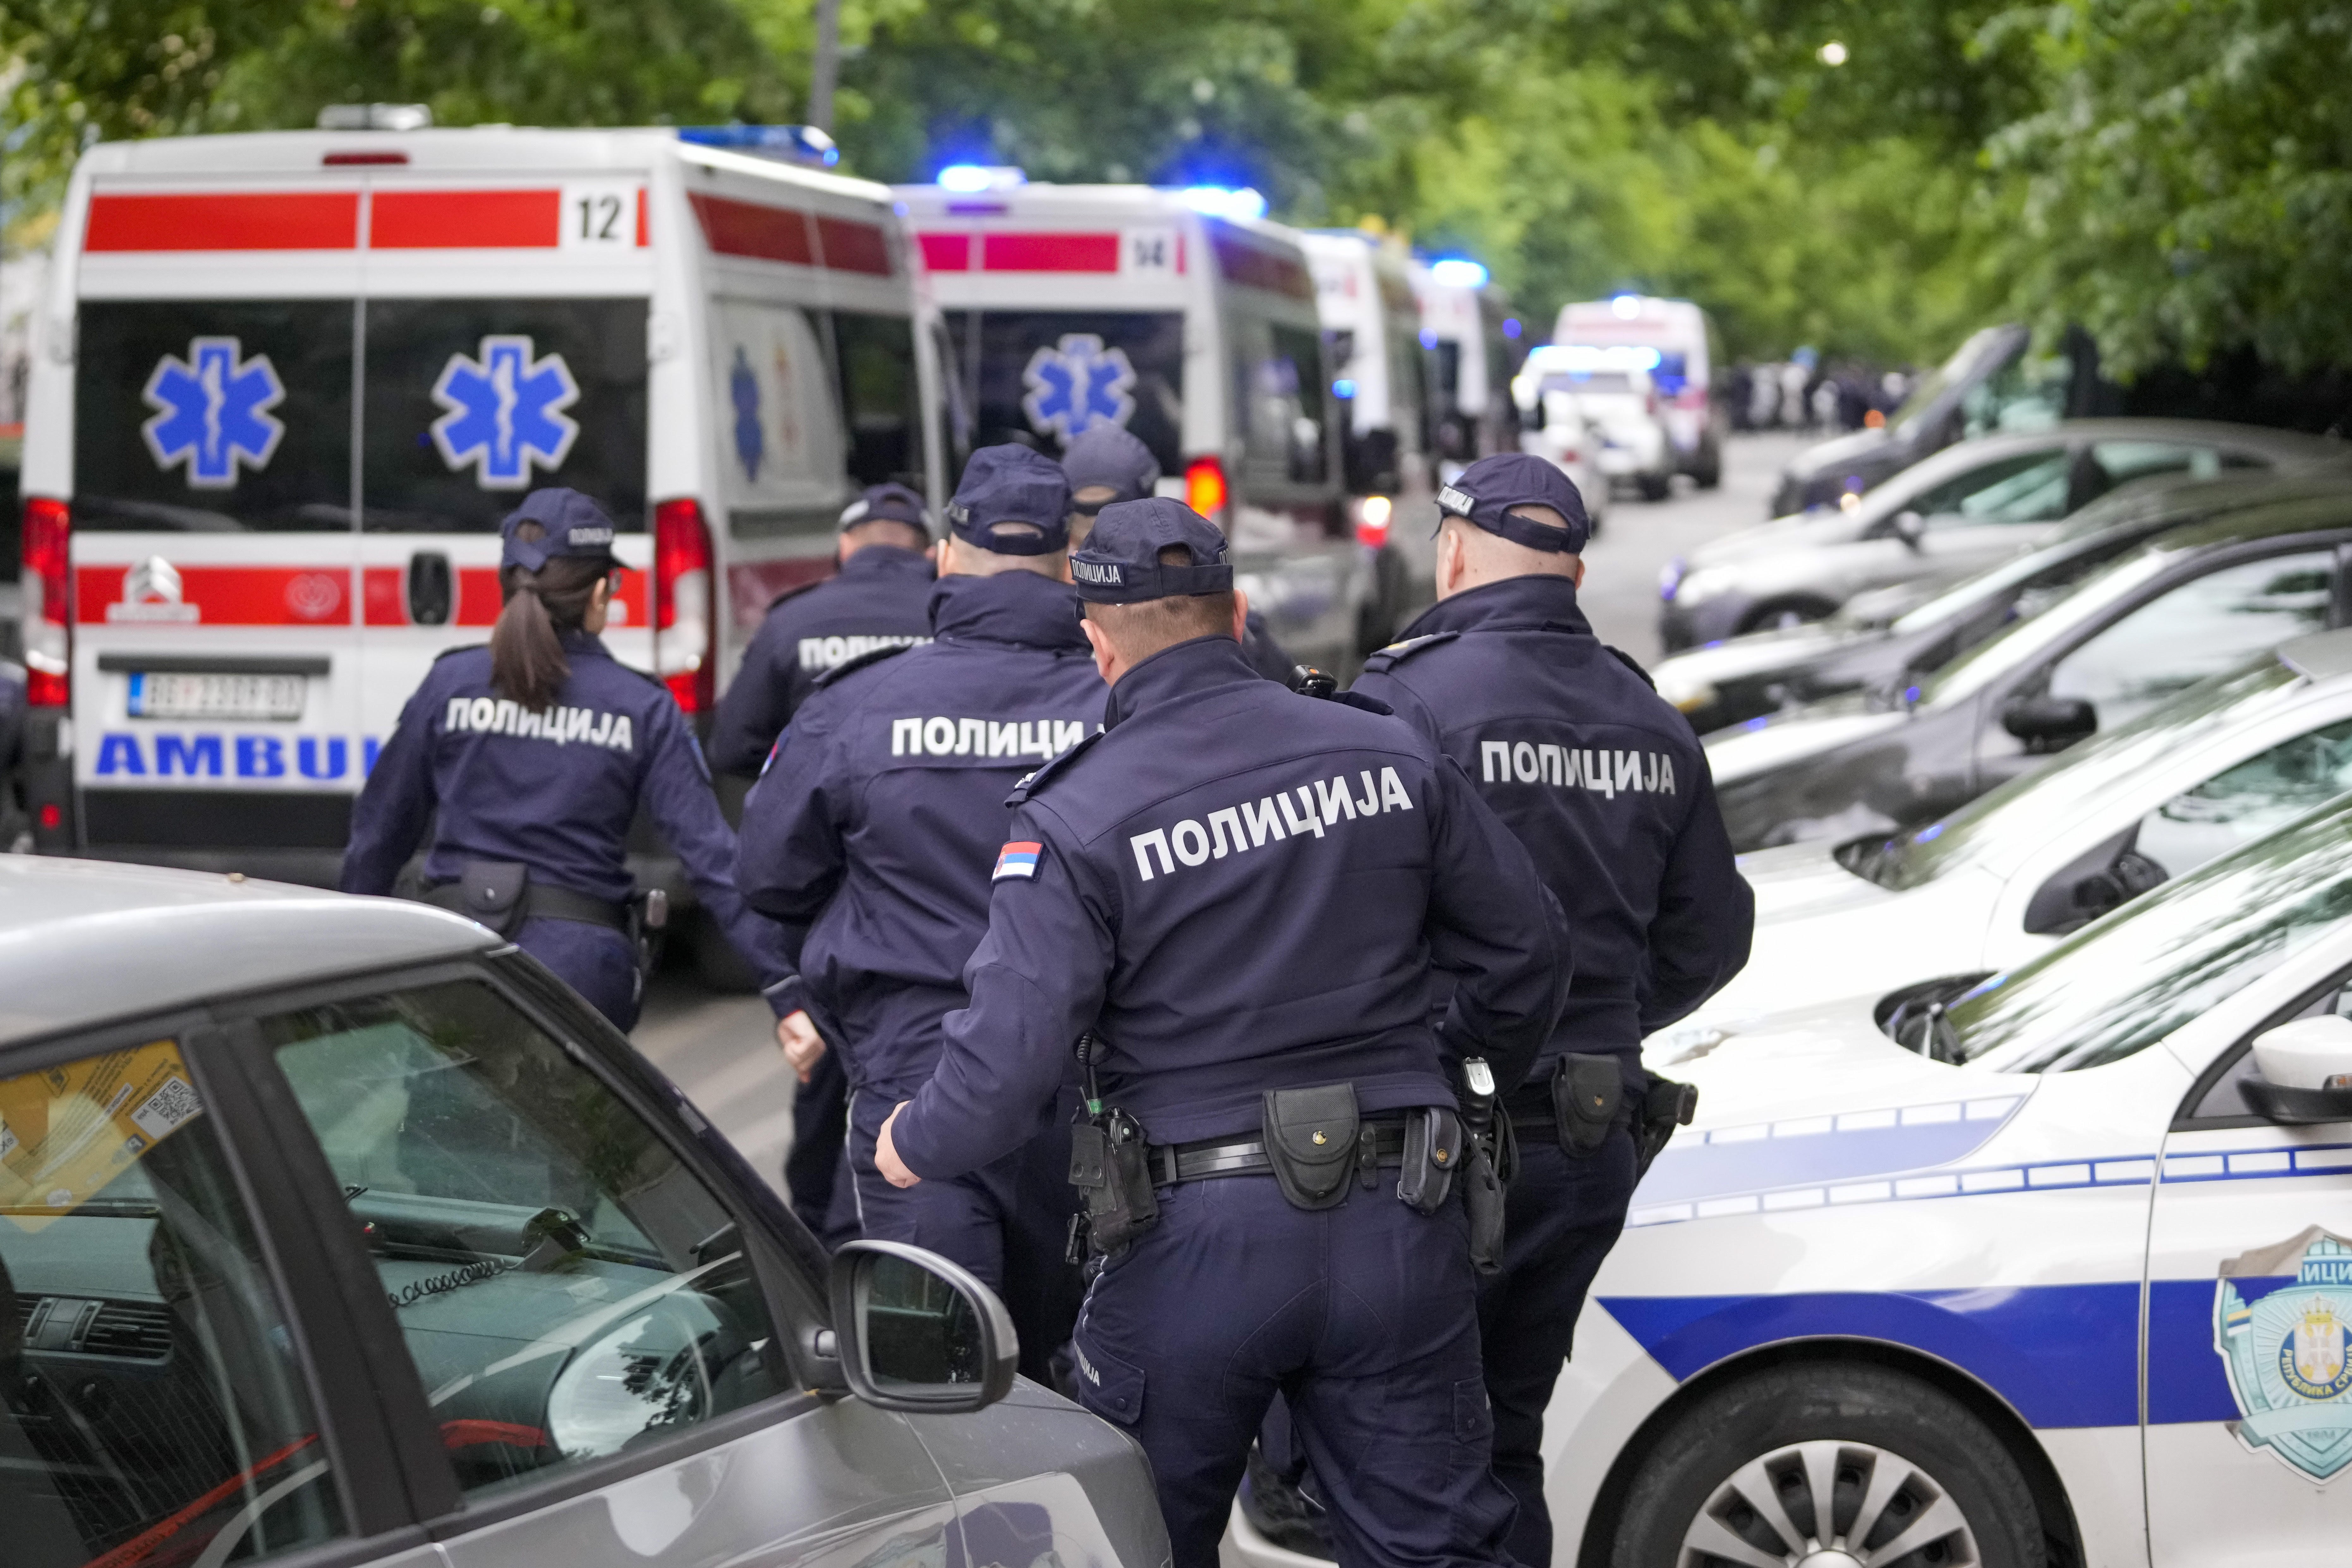 Police officers block the streets surrounding the Vladislav Ribnikar school in Belgrade, Serbia